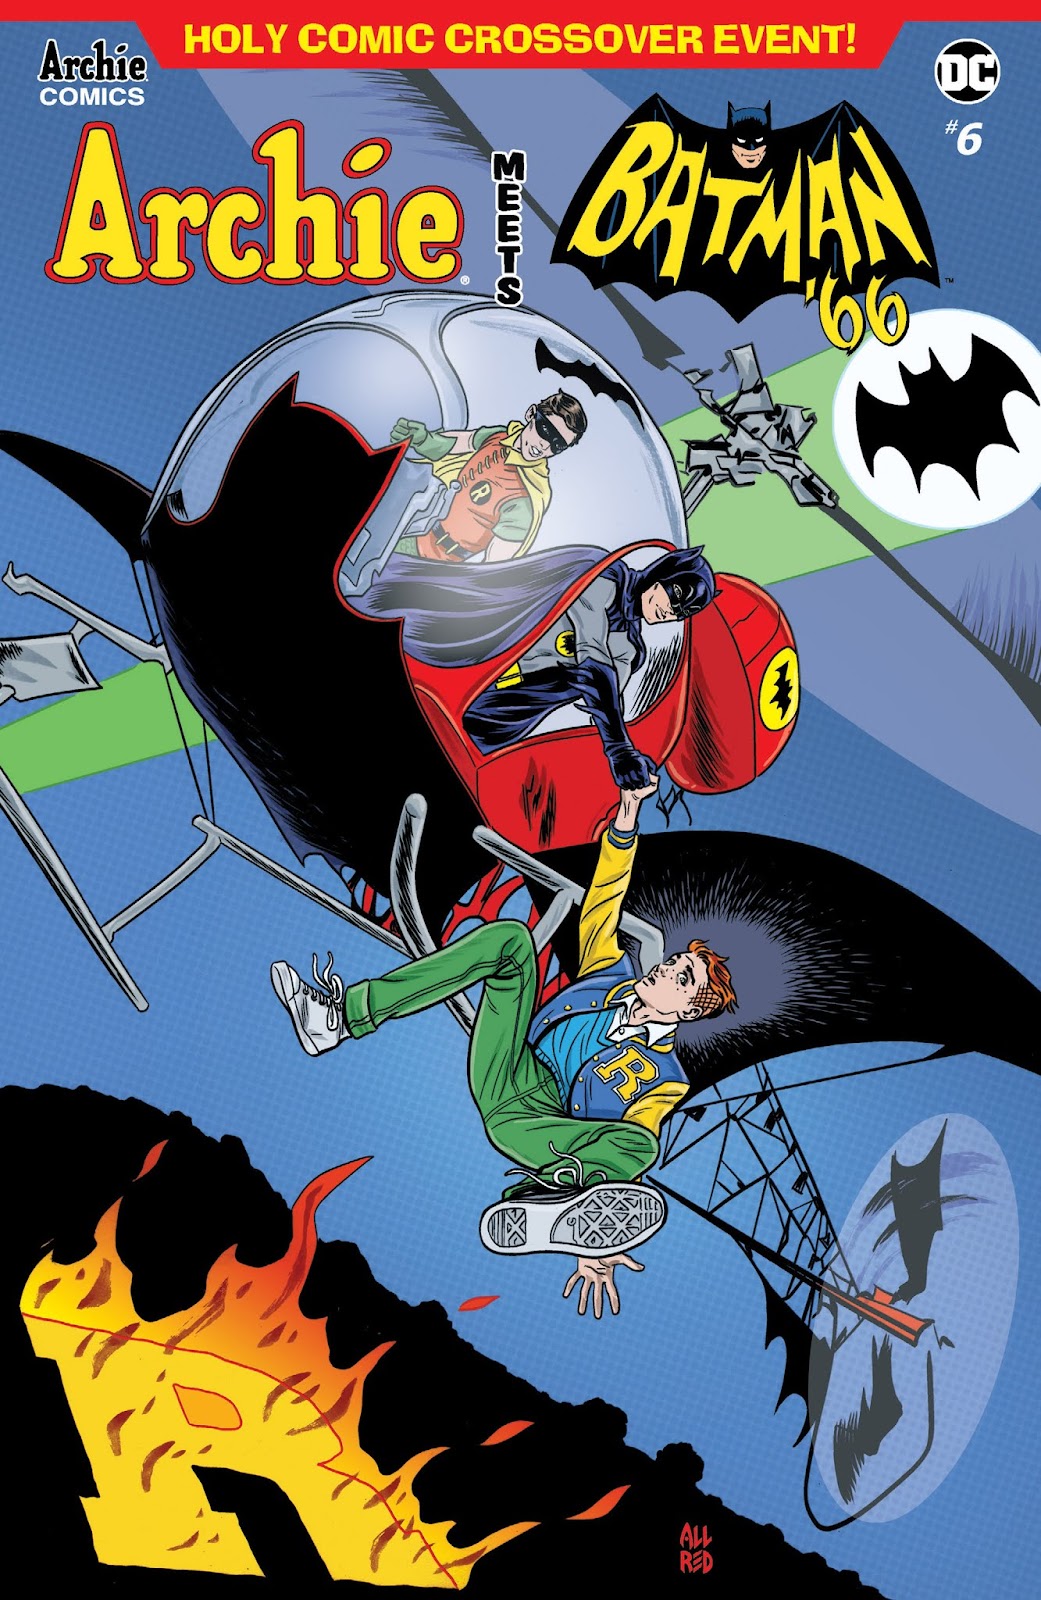 Archie Meets Batman '66 issue 6 - Page 1